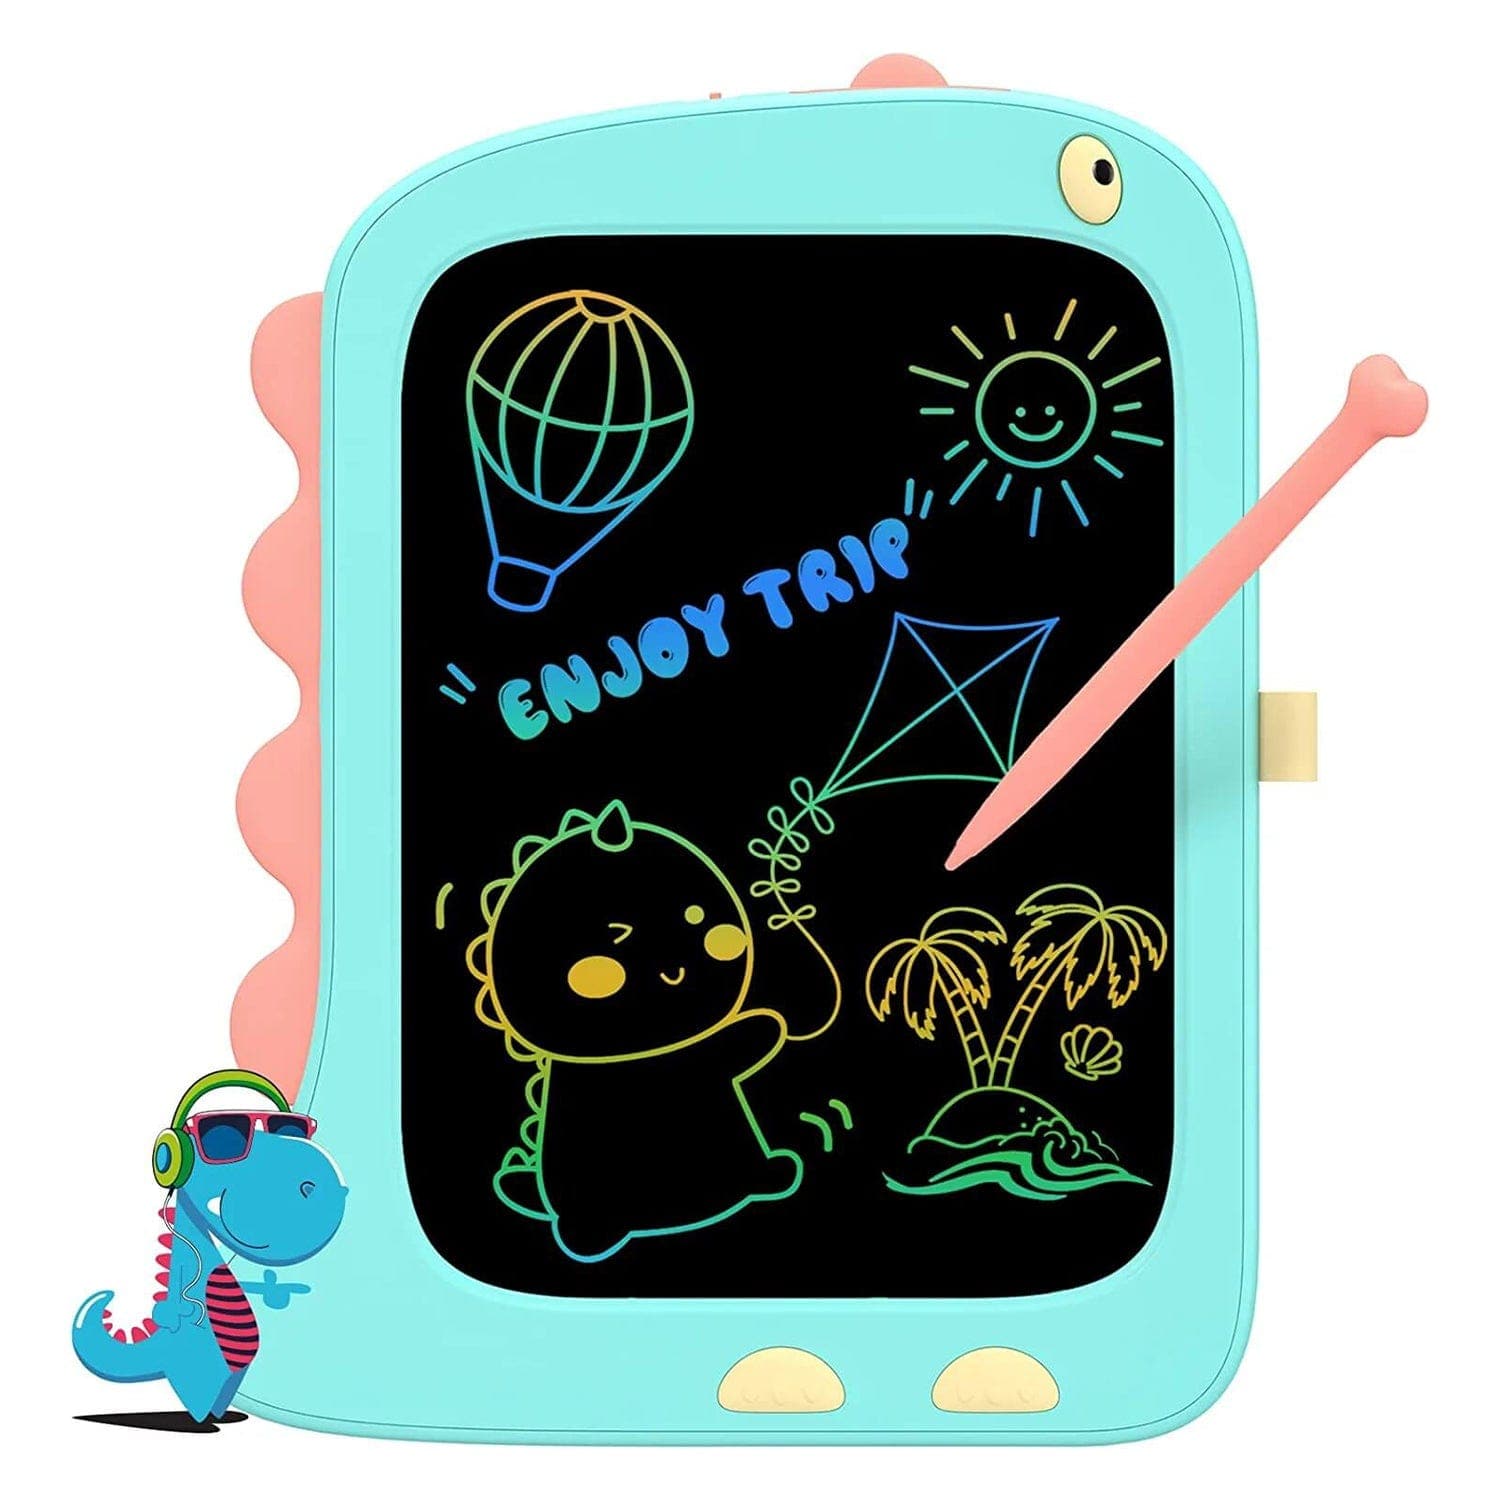 TEKFUN Kids Toys LCD Writing Tablet - 8.5inch Drawing Board, Dinosaur Toys - Mytekfun